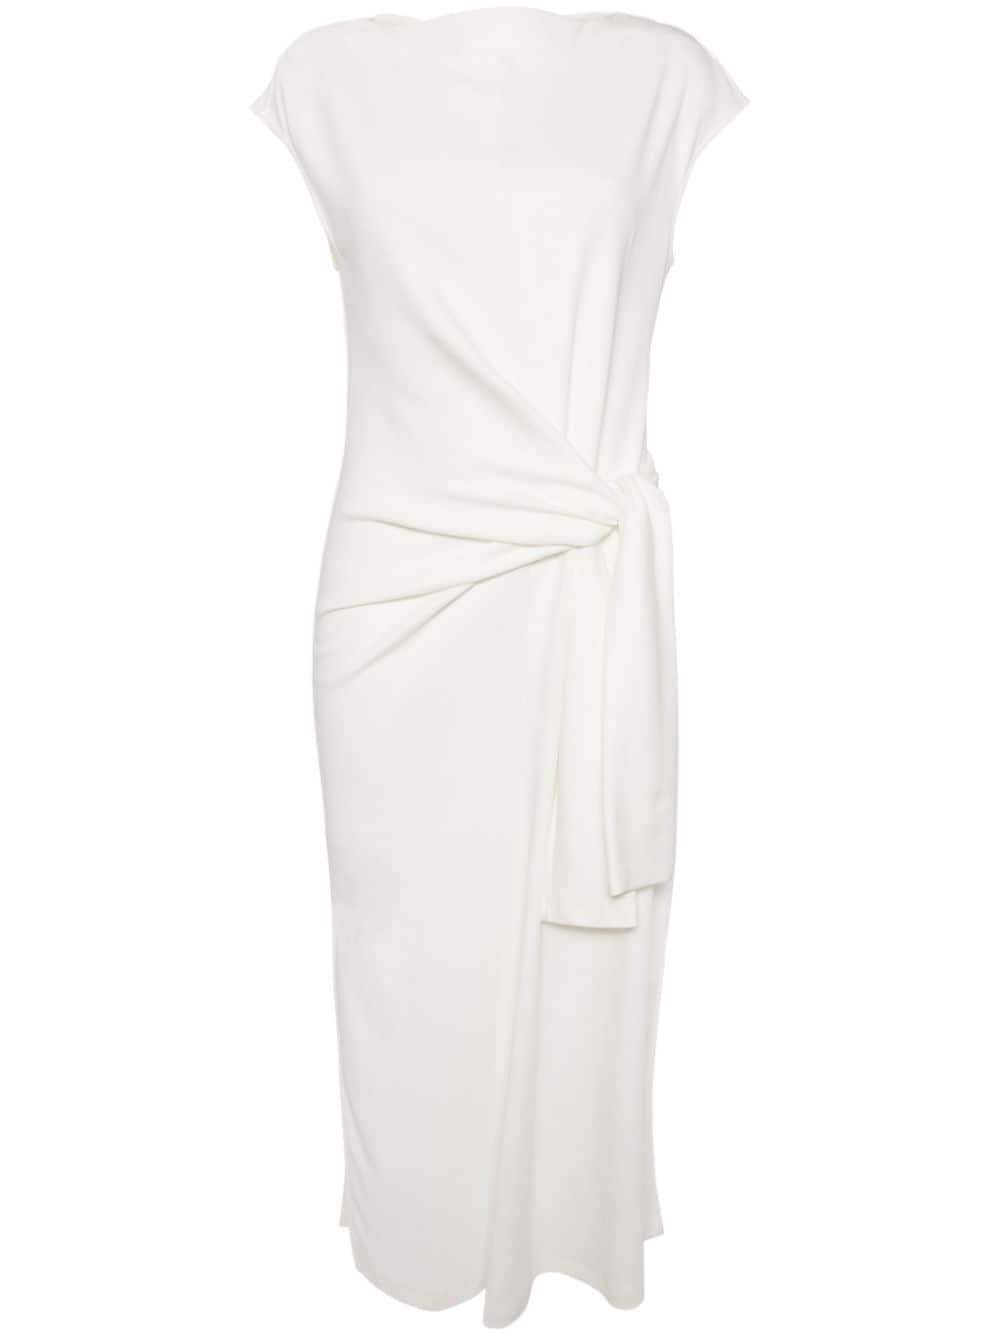 Image 1 of Goen.J knot-detail sleeveless cotton-jersey midi dress